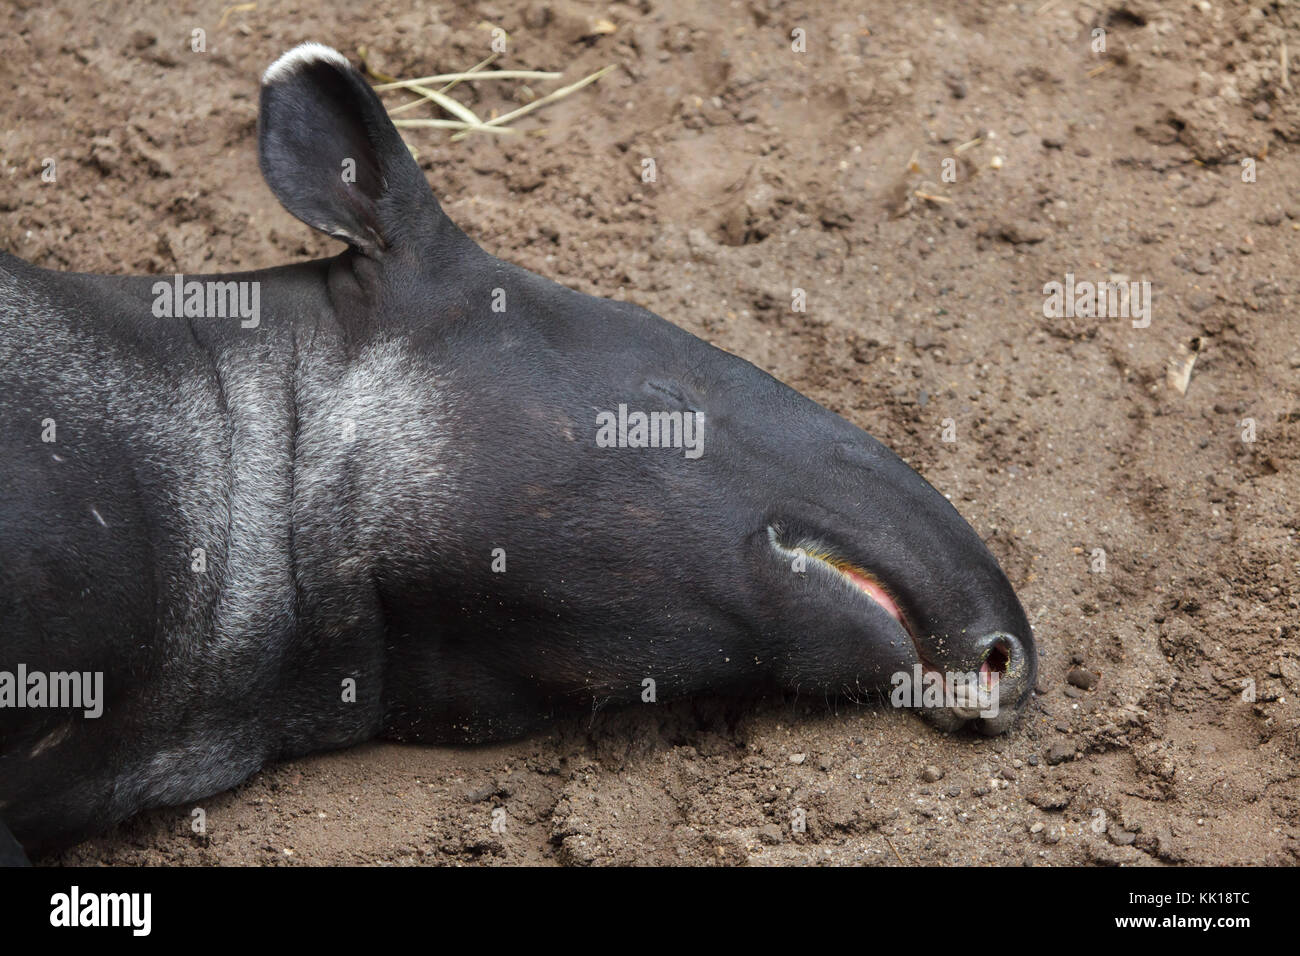 Malayan tapir (Tapirus indicus), also known as the Asian tapir. Stock Photo